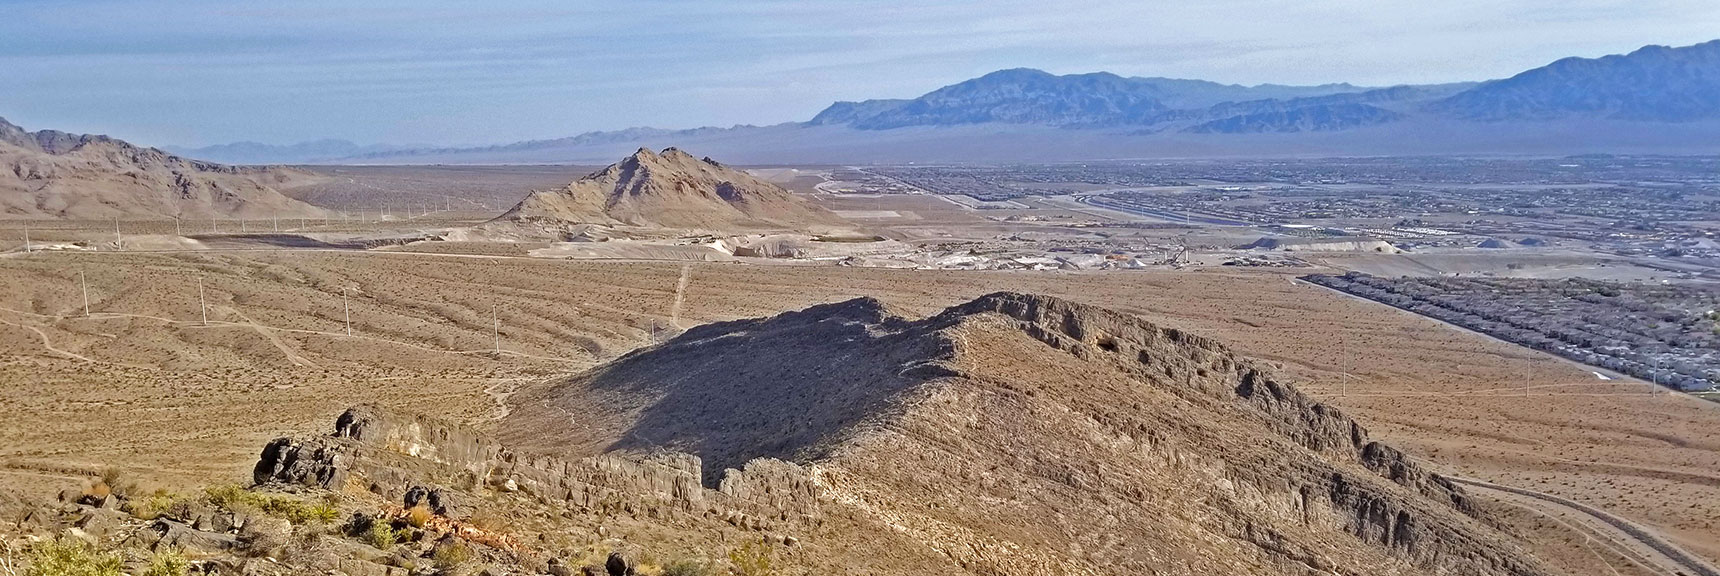 View North Down Cheyenne Mt Summit Ridge To Sheep Range and Fossil Ridge | Cheyenne Mountain | Las Vegas, Nevada